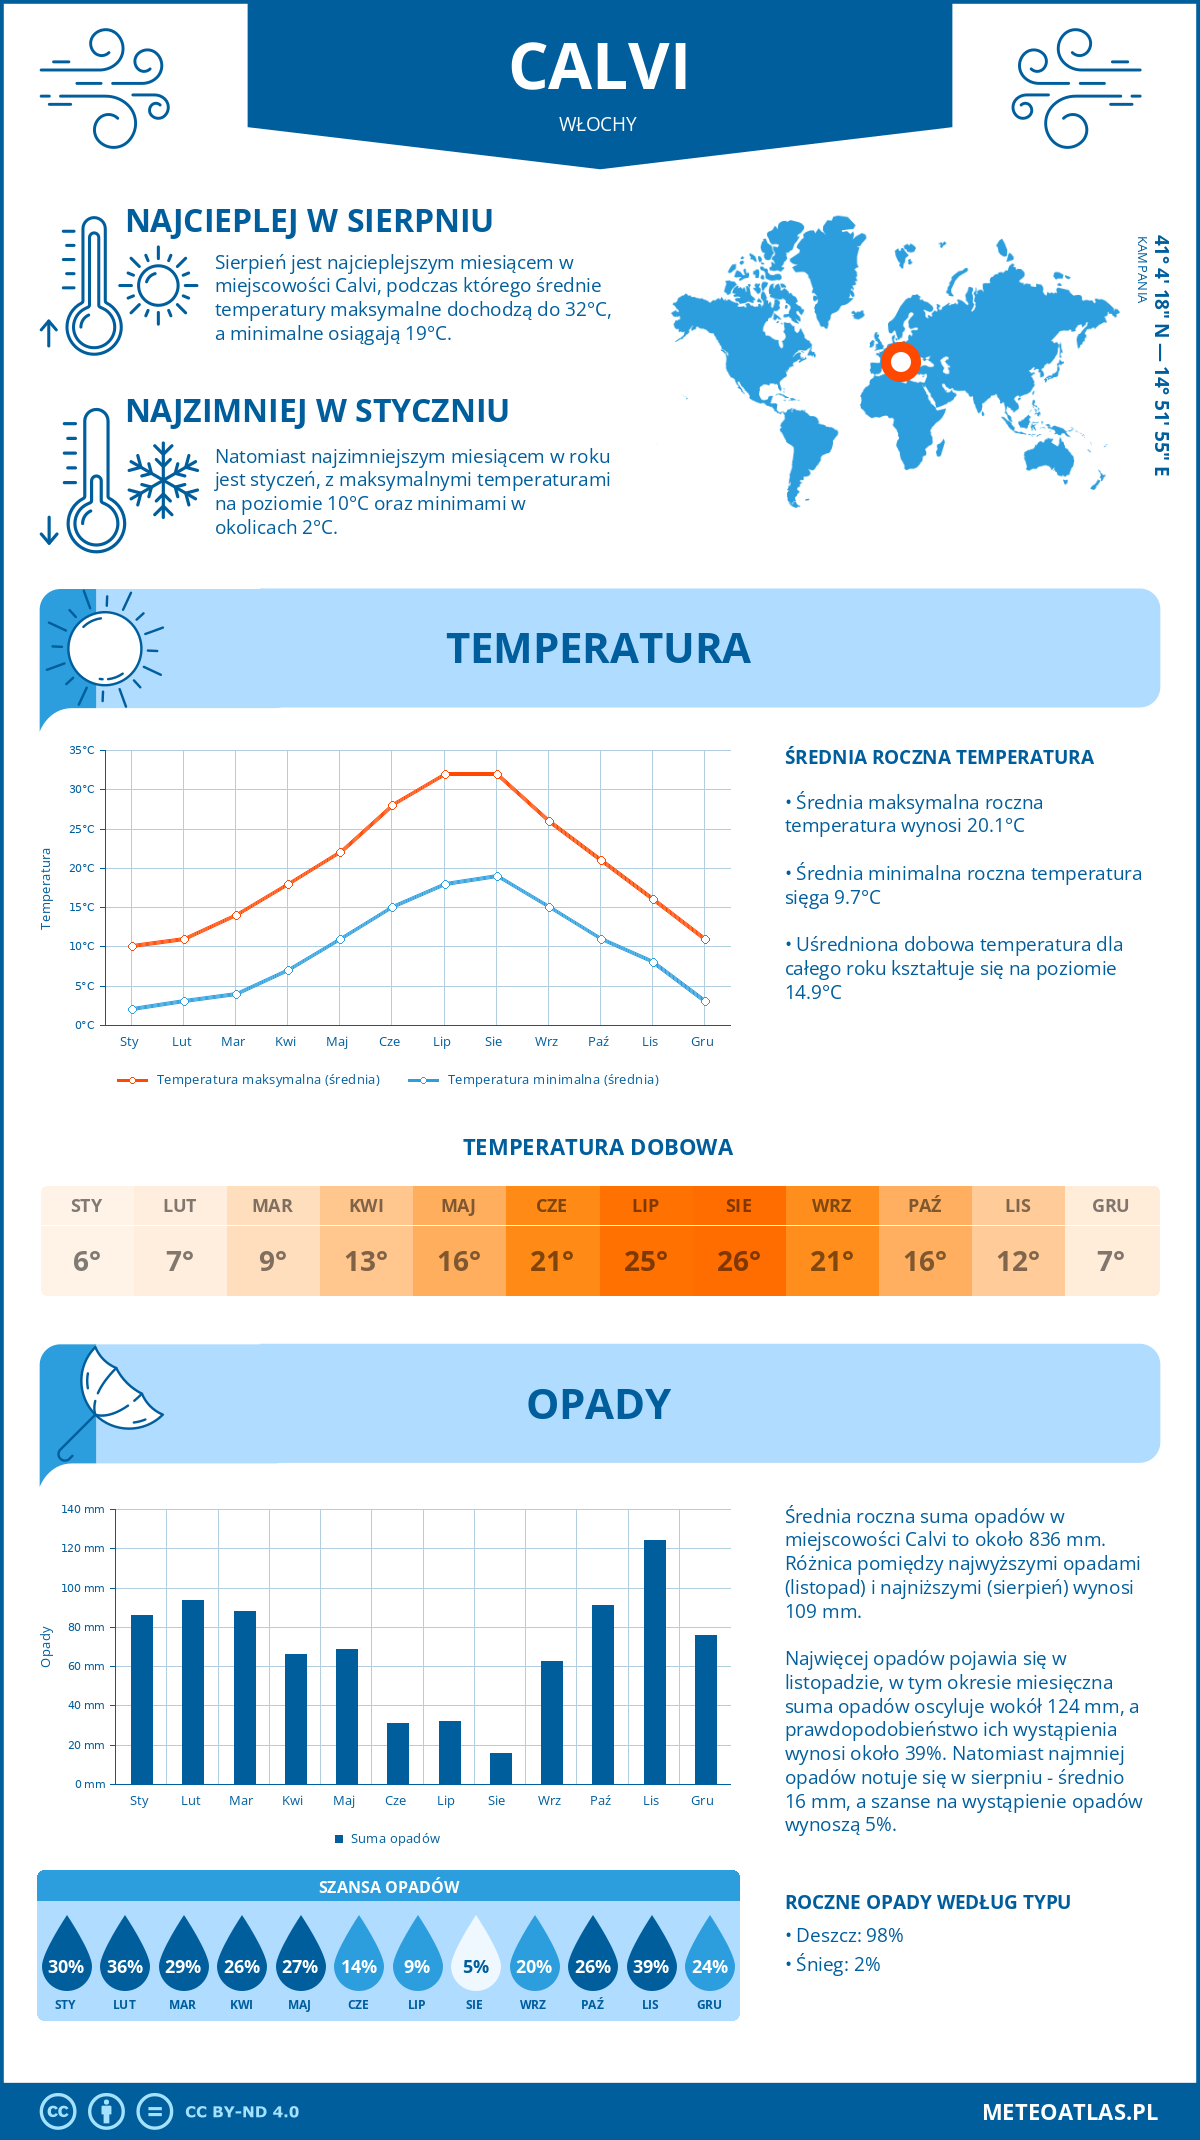 Pogoda Calvi (Włochy). Temperatura oraz opady.